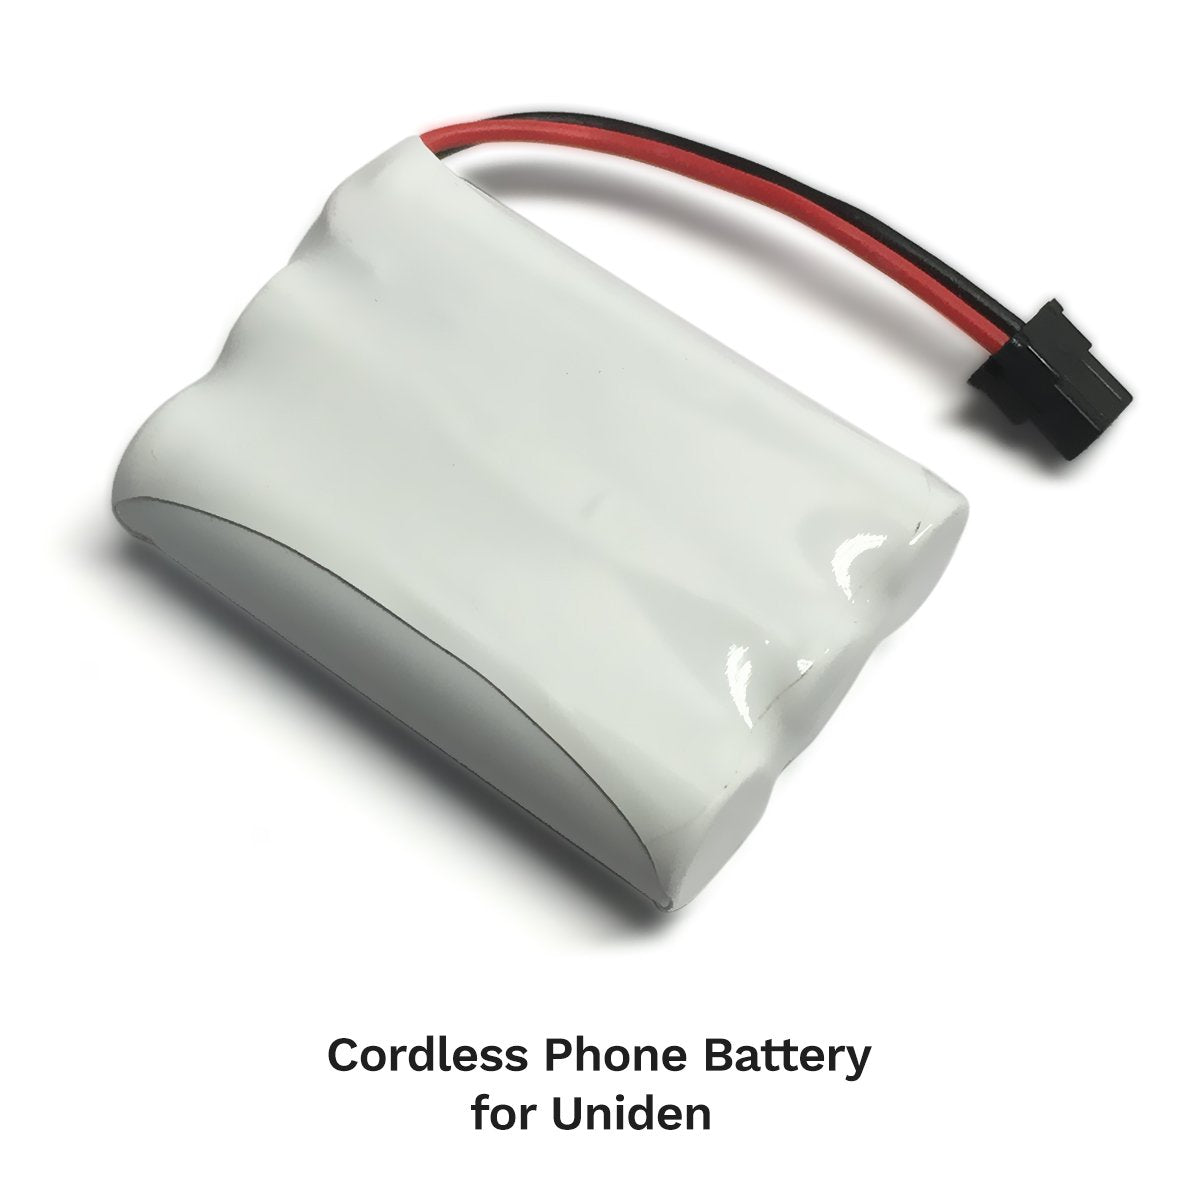 Uniden DCT7585 Cordless Phone Battery